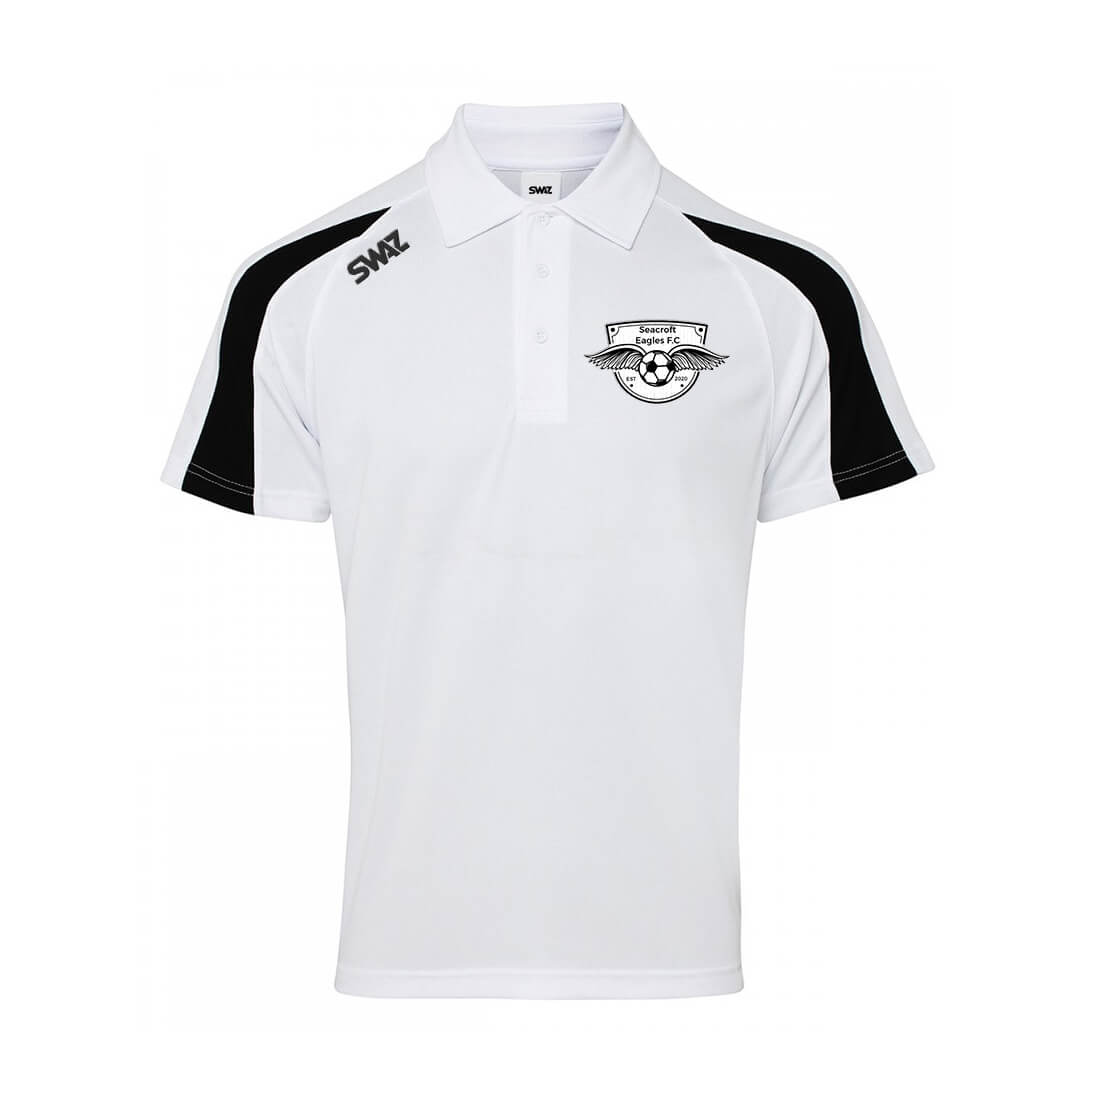 Seacroft Eagles Polo Shirts | Football Training Kit and Teamwear – SWAZ